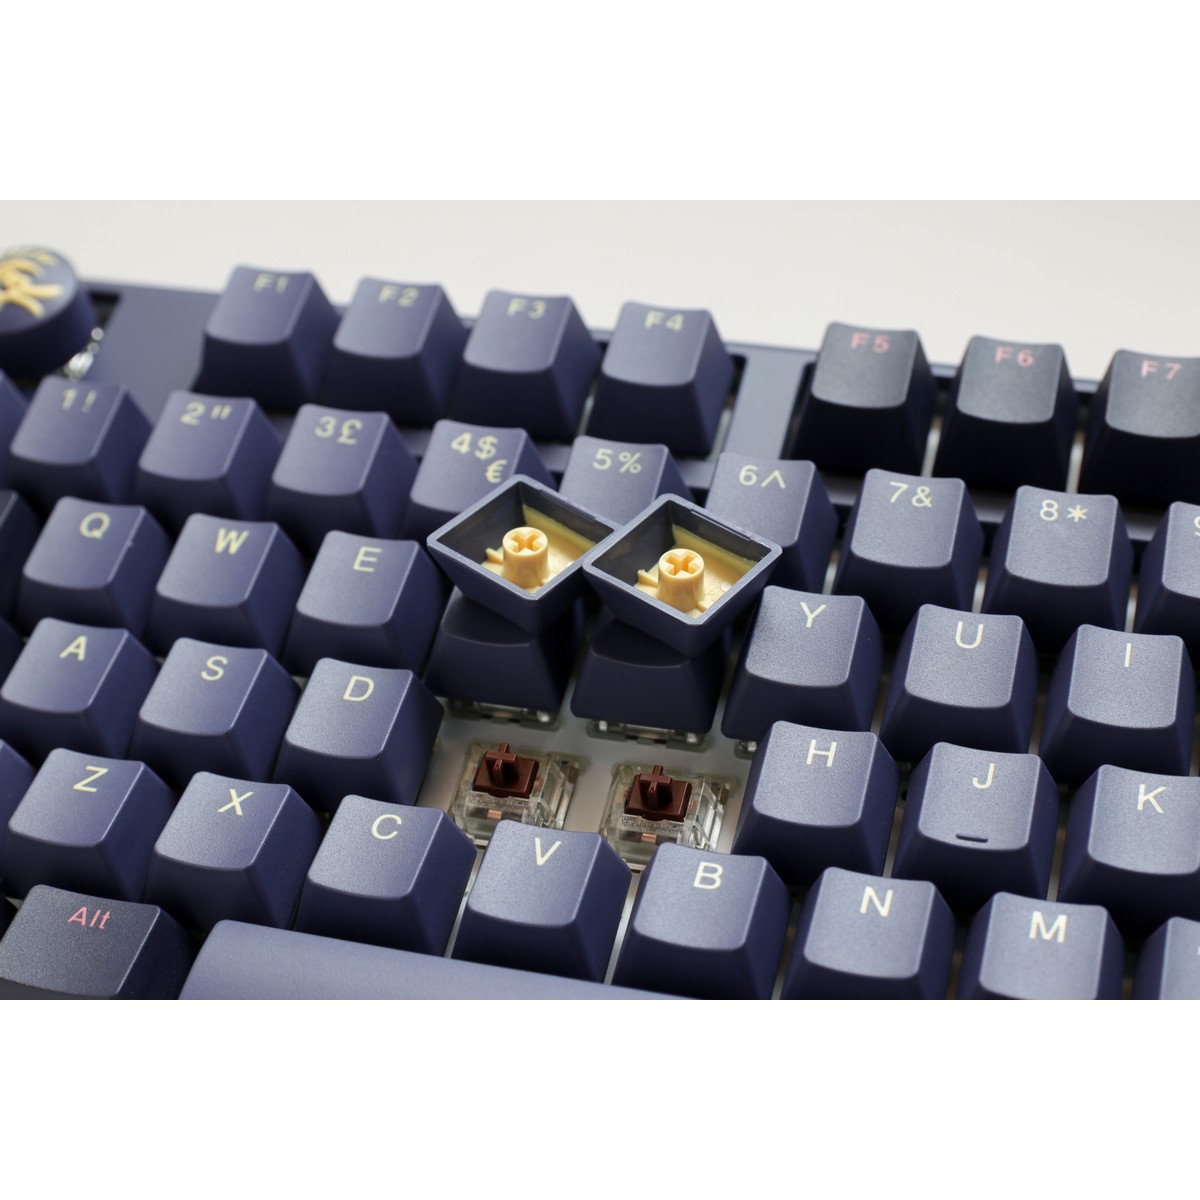 Ducky - Ducky One 3 Cosmic TKL 80% USB RGB Mechanical Gaming Keyboard Cherry MX Blue Switch - UK Layout